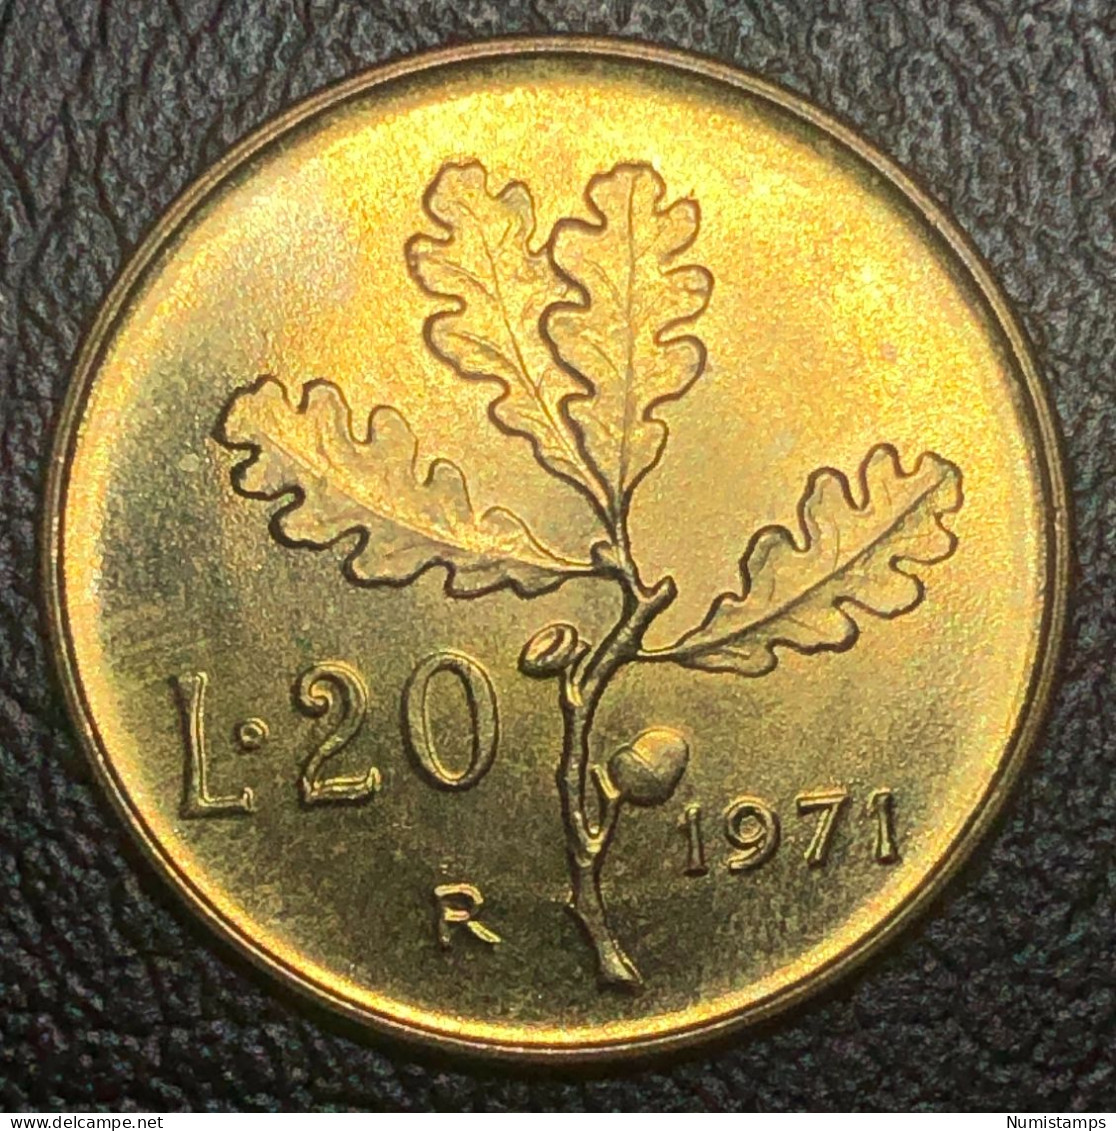 Italia 20 Lire, 1971 (FDC) - 20 Liras